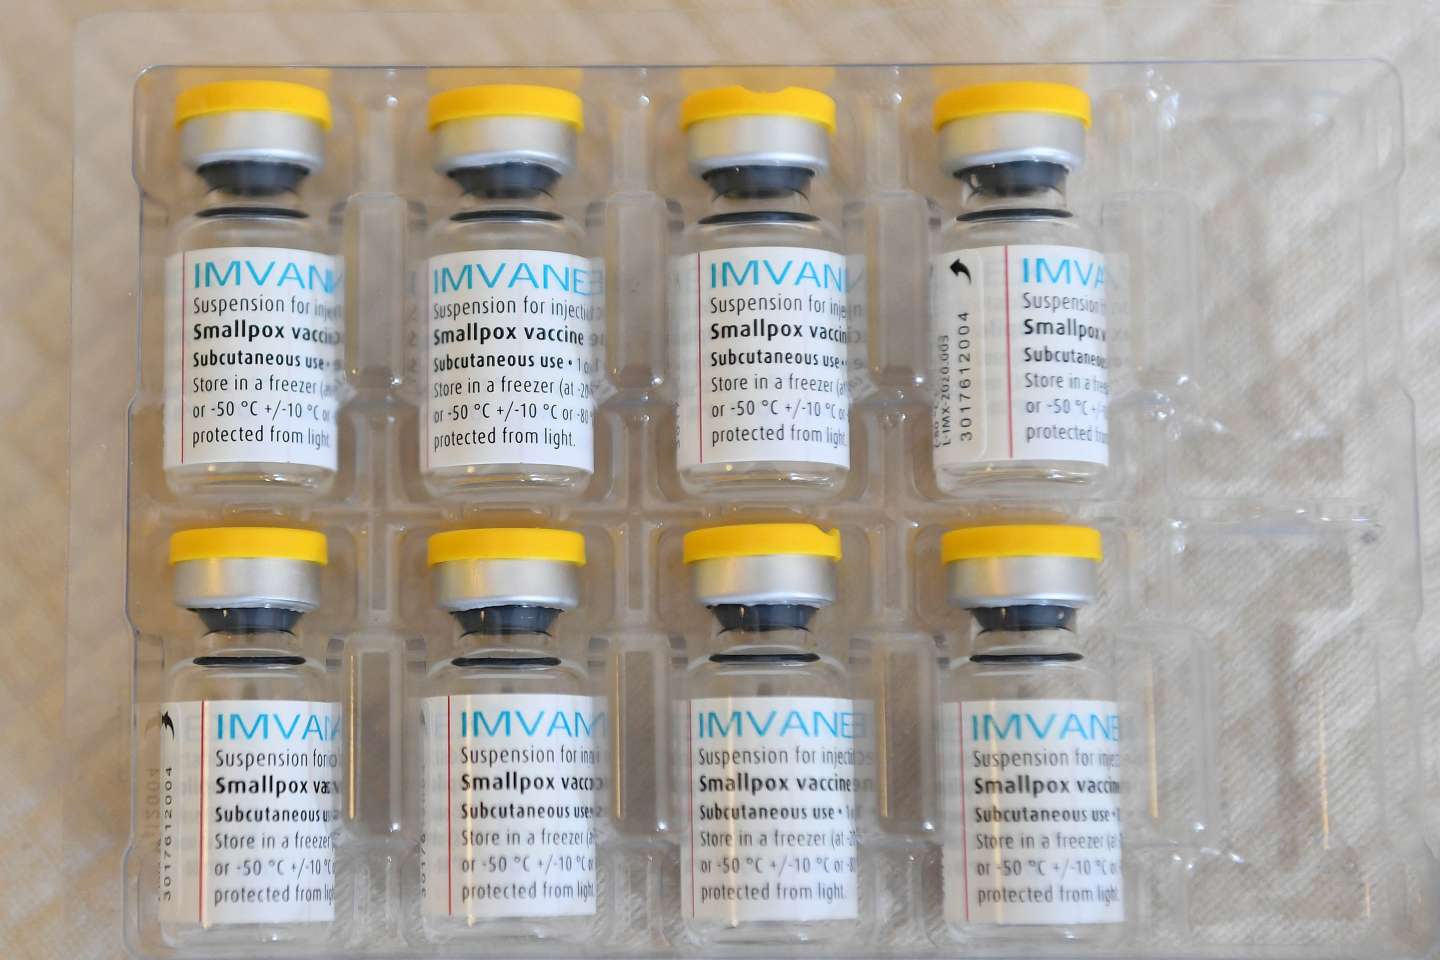 Le report de la deuxième dose de vaccin contre la variole du singe suscite la controverse